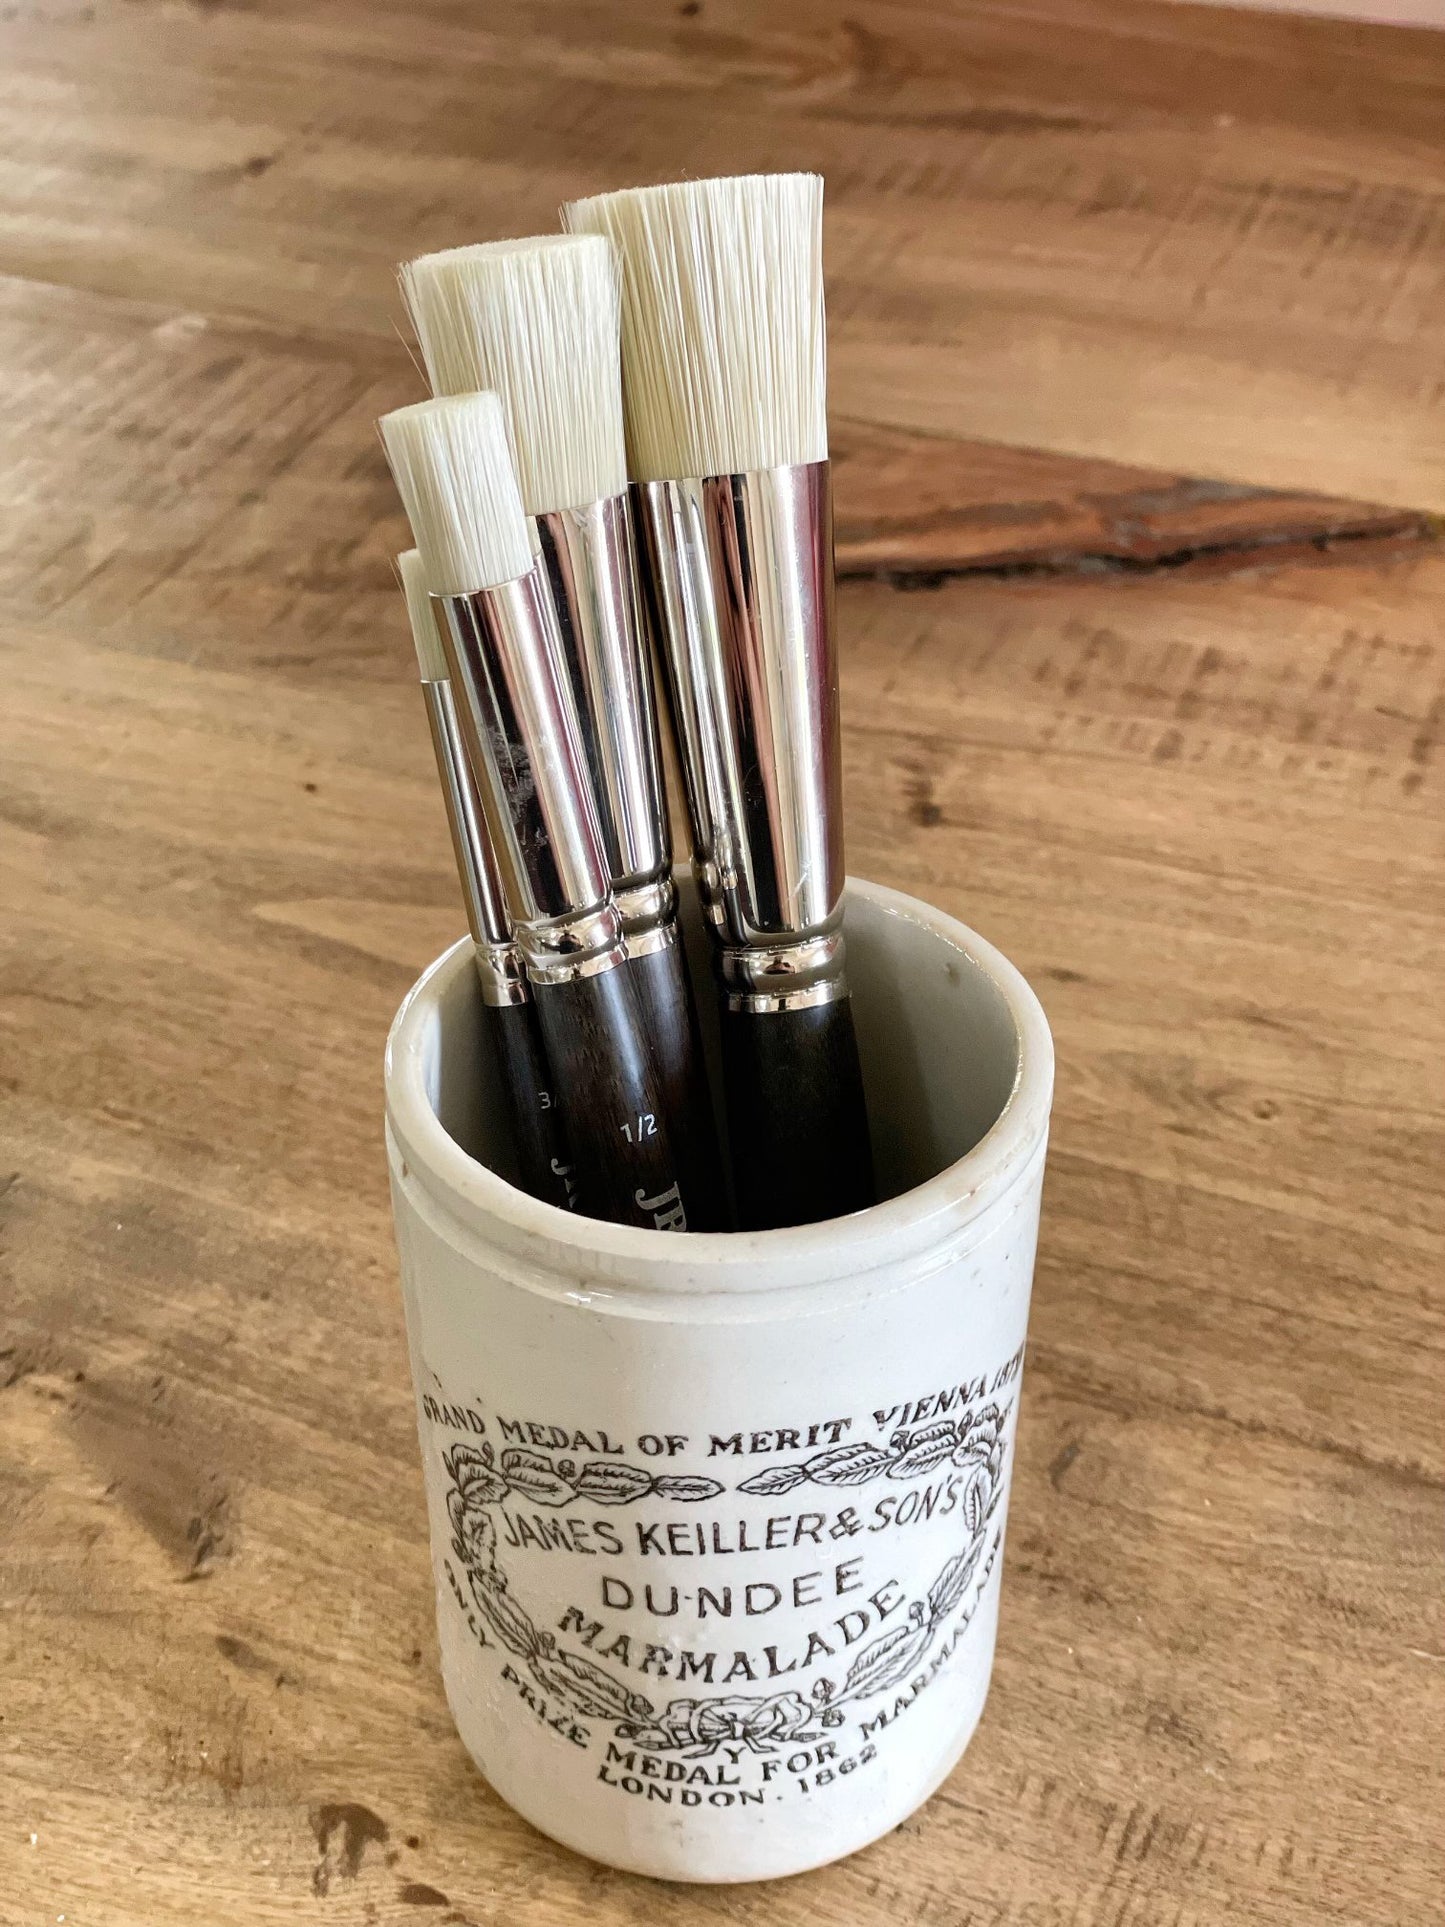 Stencil Brush Set